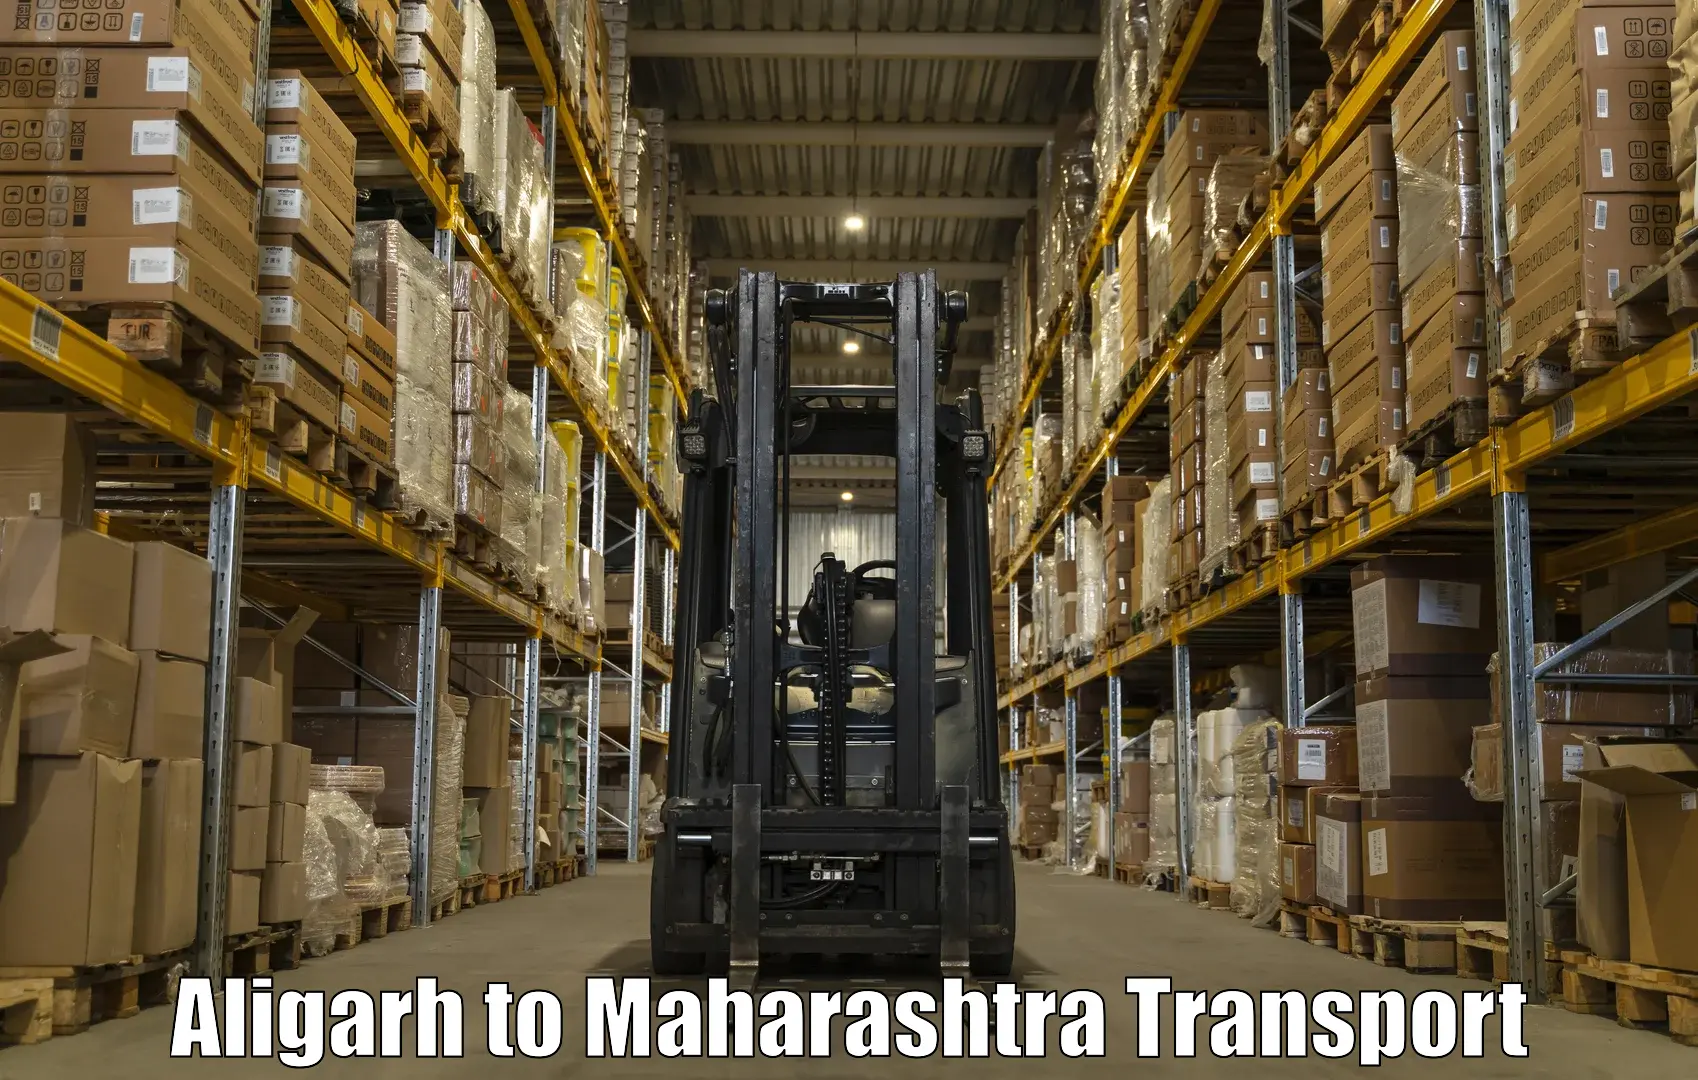 Truck transport companies in India Aligarh to Worli